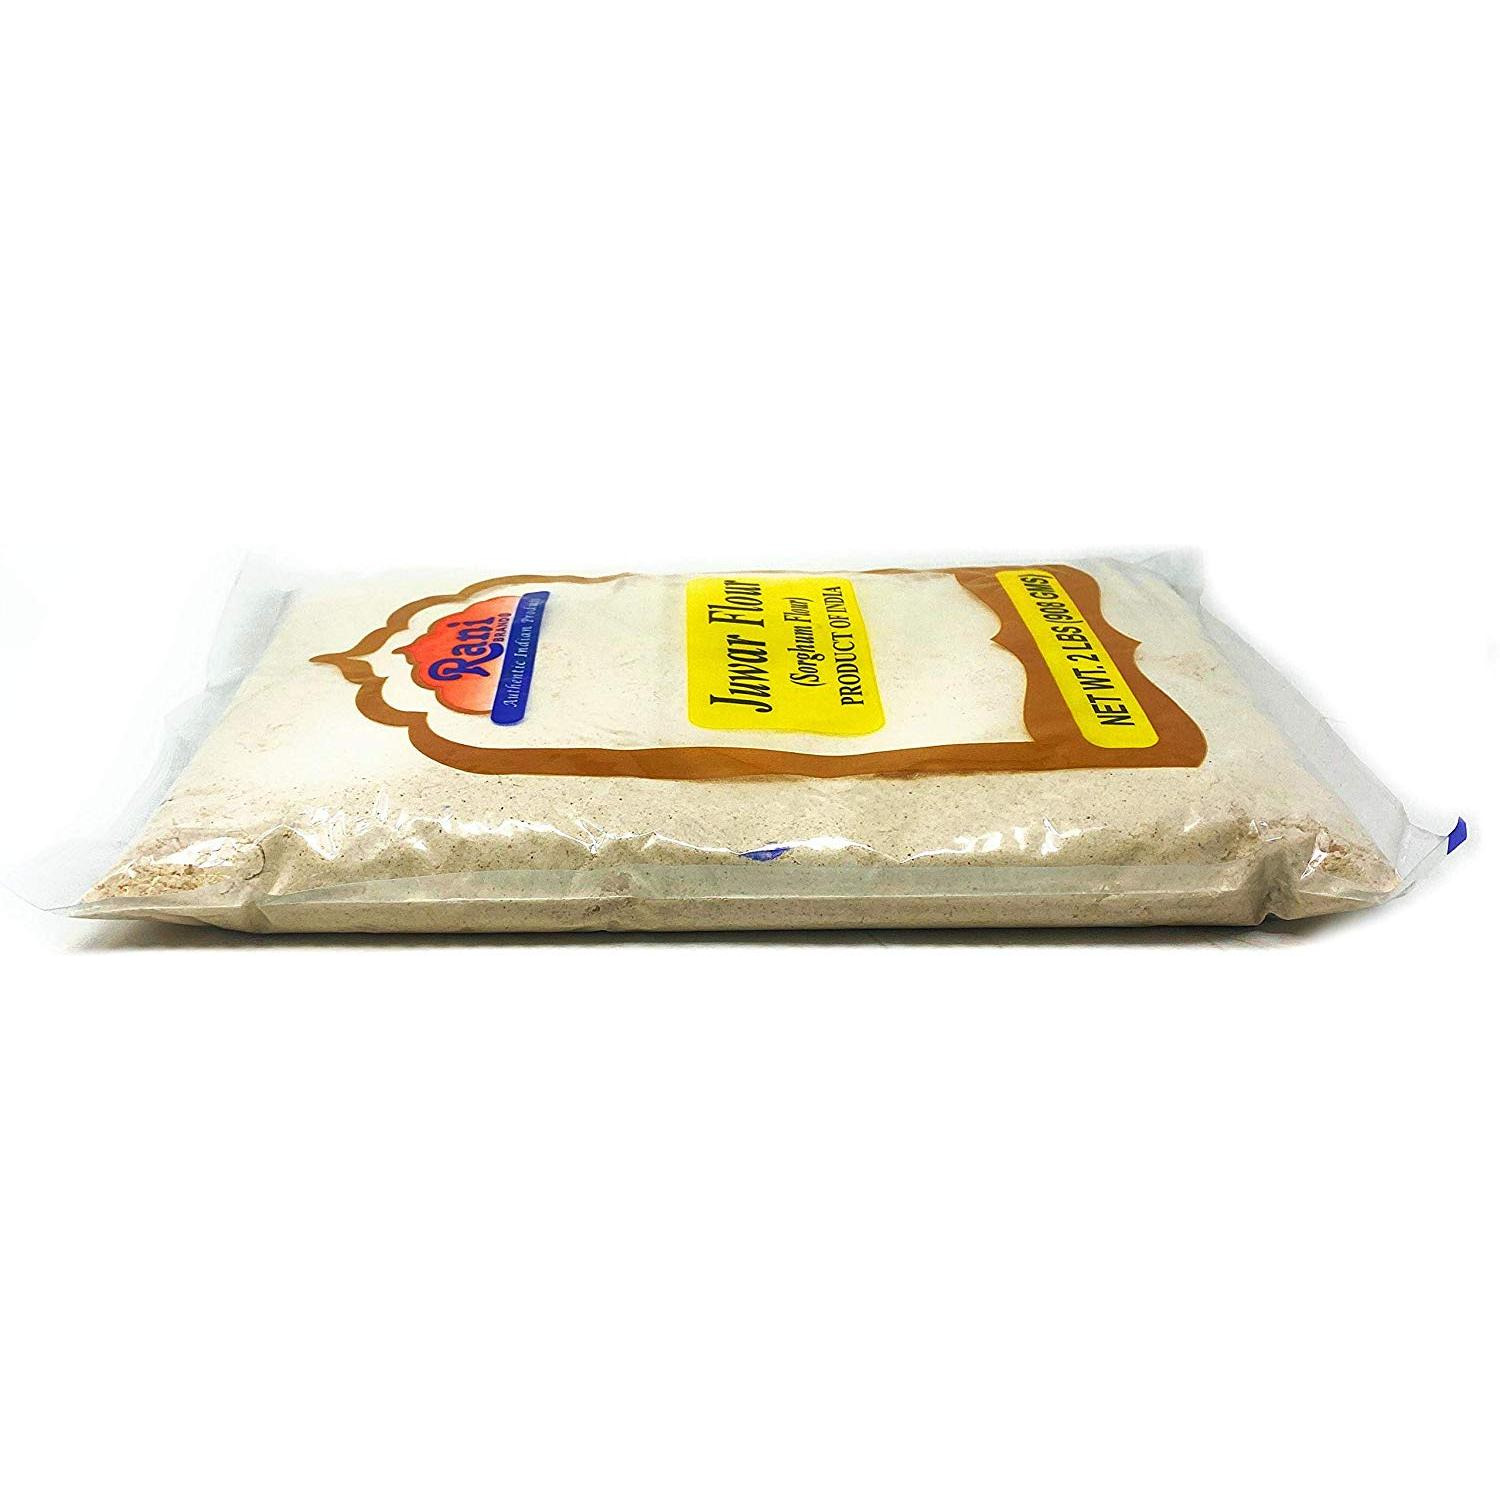 Rani Juwar (Sorghum) Flour 2lbs (32oz) 2 Pound ~ All Natural, Salt-Free | Vegan | No Colors | Gluten Friendly | NON-GMO | Indian Origin